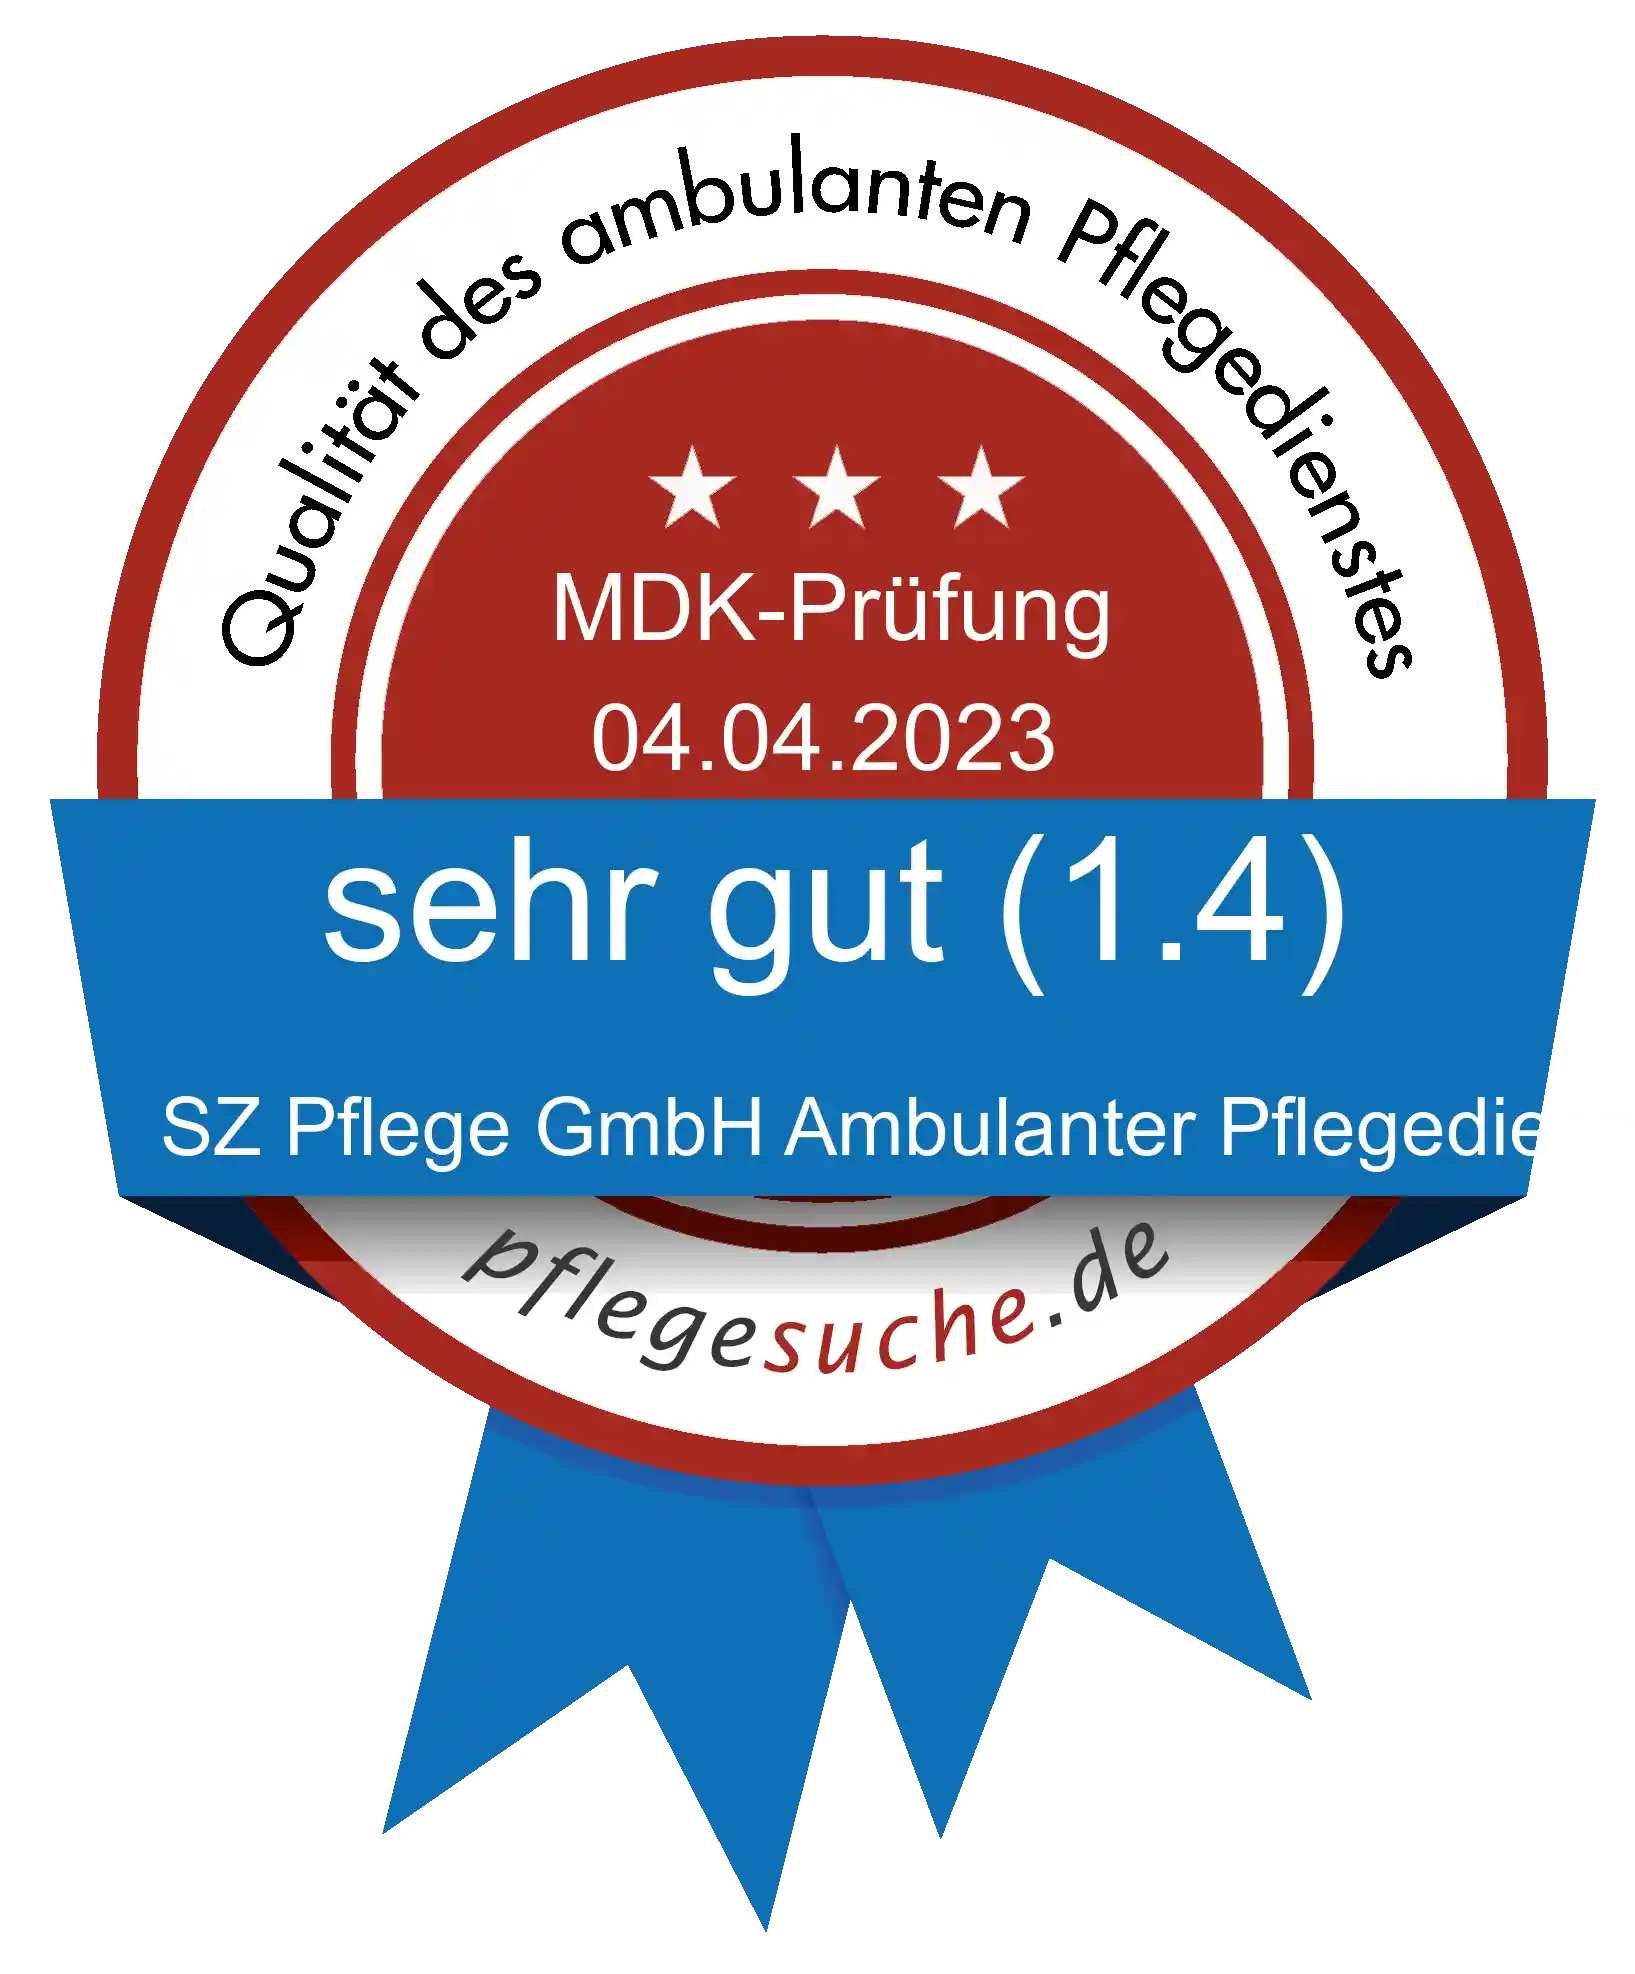 Siegel Benotung: SZ Pflege GmbH Ambulanter Pflegedienst